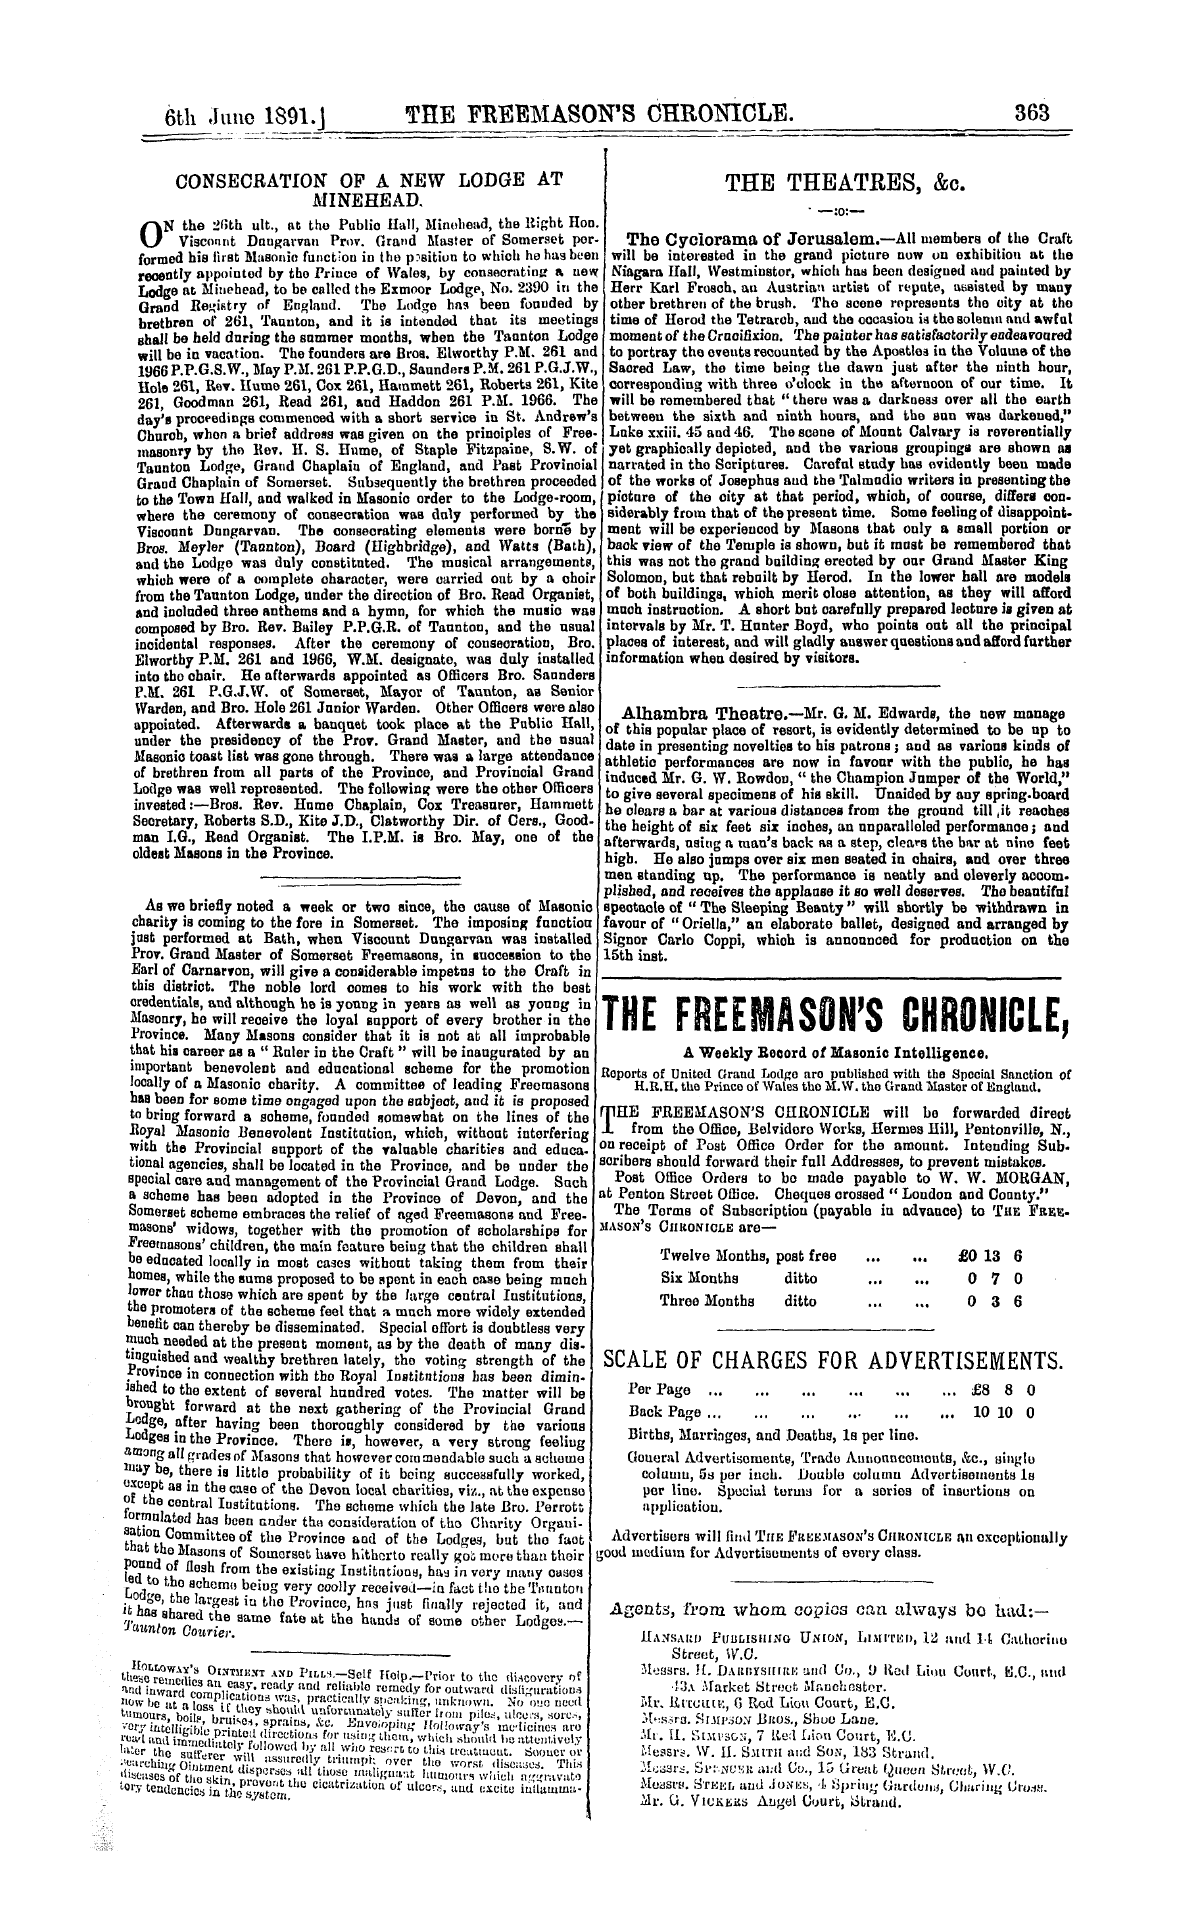 The Freemason's Chronicle: 1891-06-06 - The Theatres, &C.